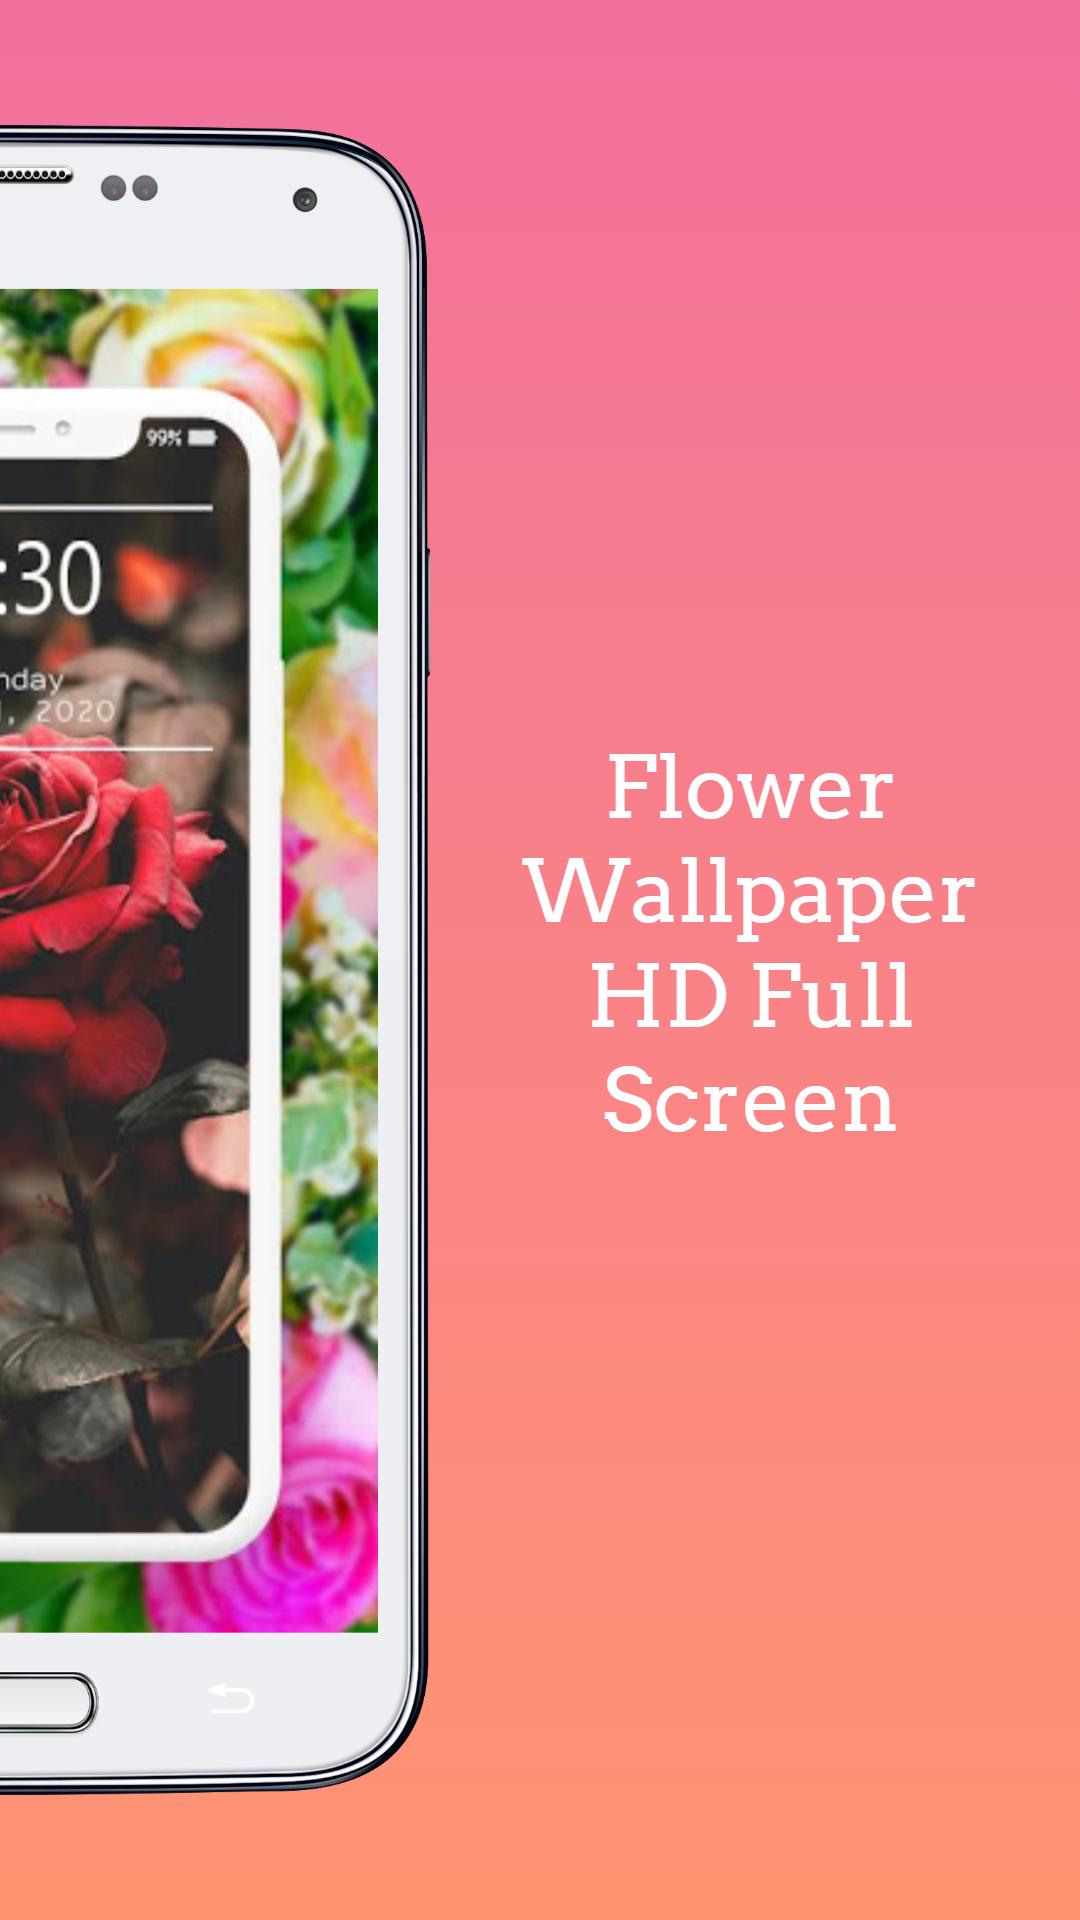 Flowers Wallpaper Hd Full Screen Pour Android Telechargez L Apk